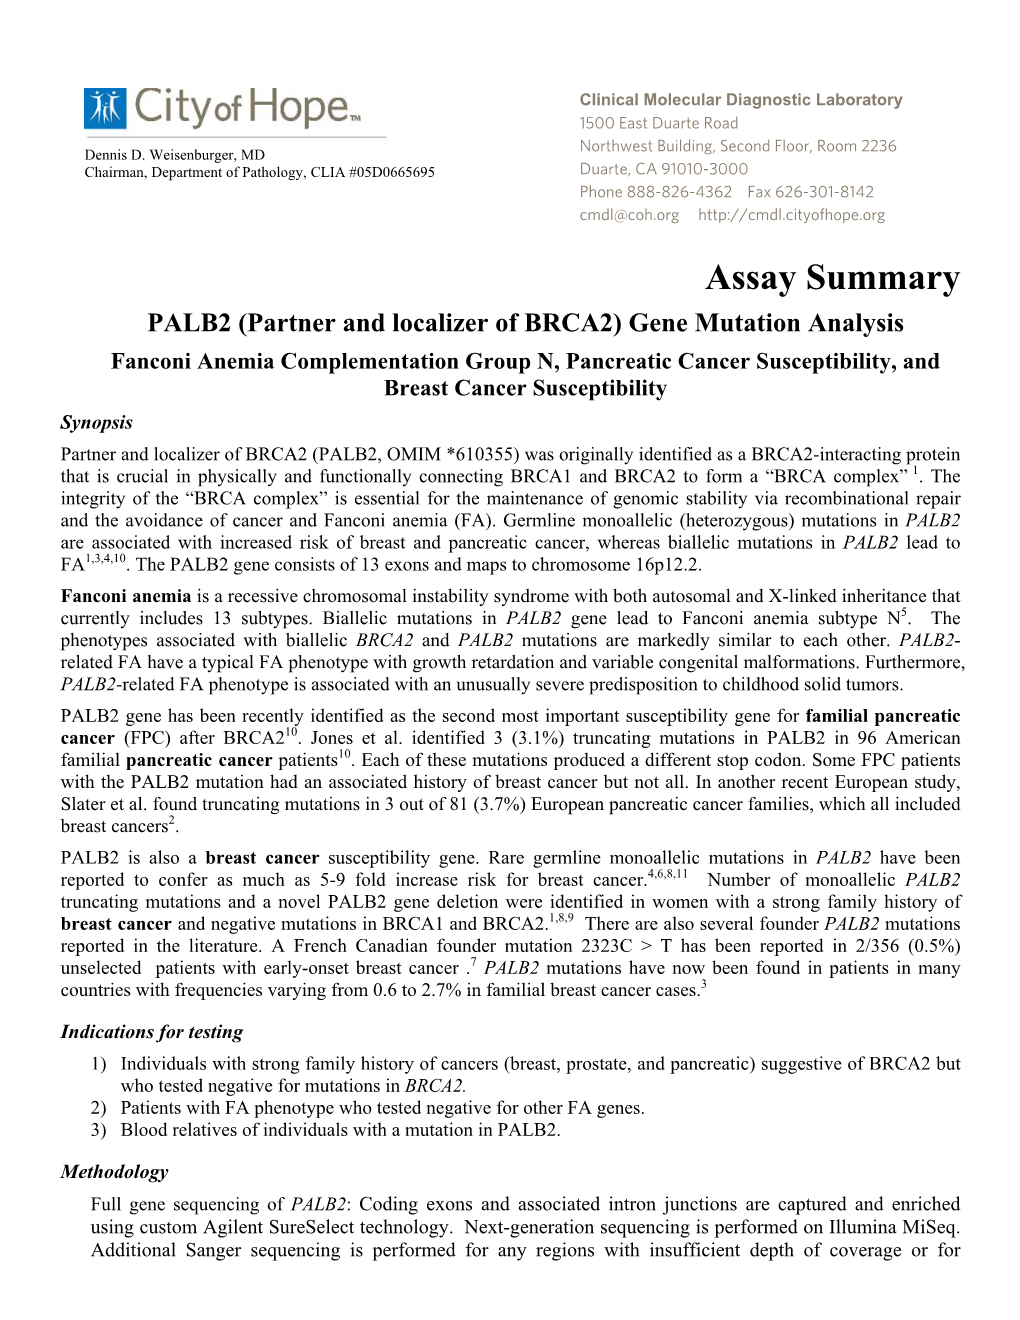 PALB2 Gene Mutation Analysis Assay Summary